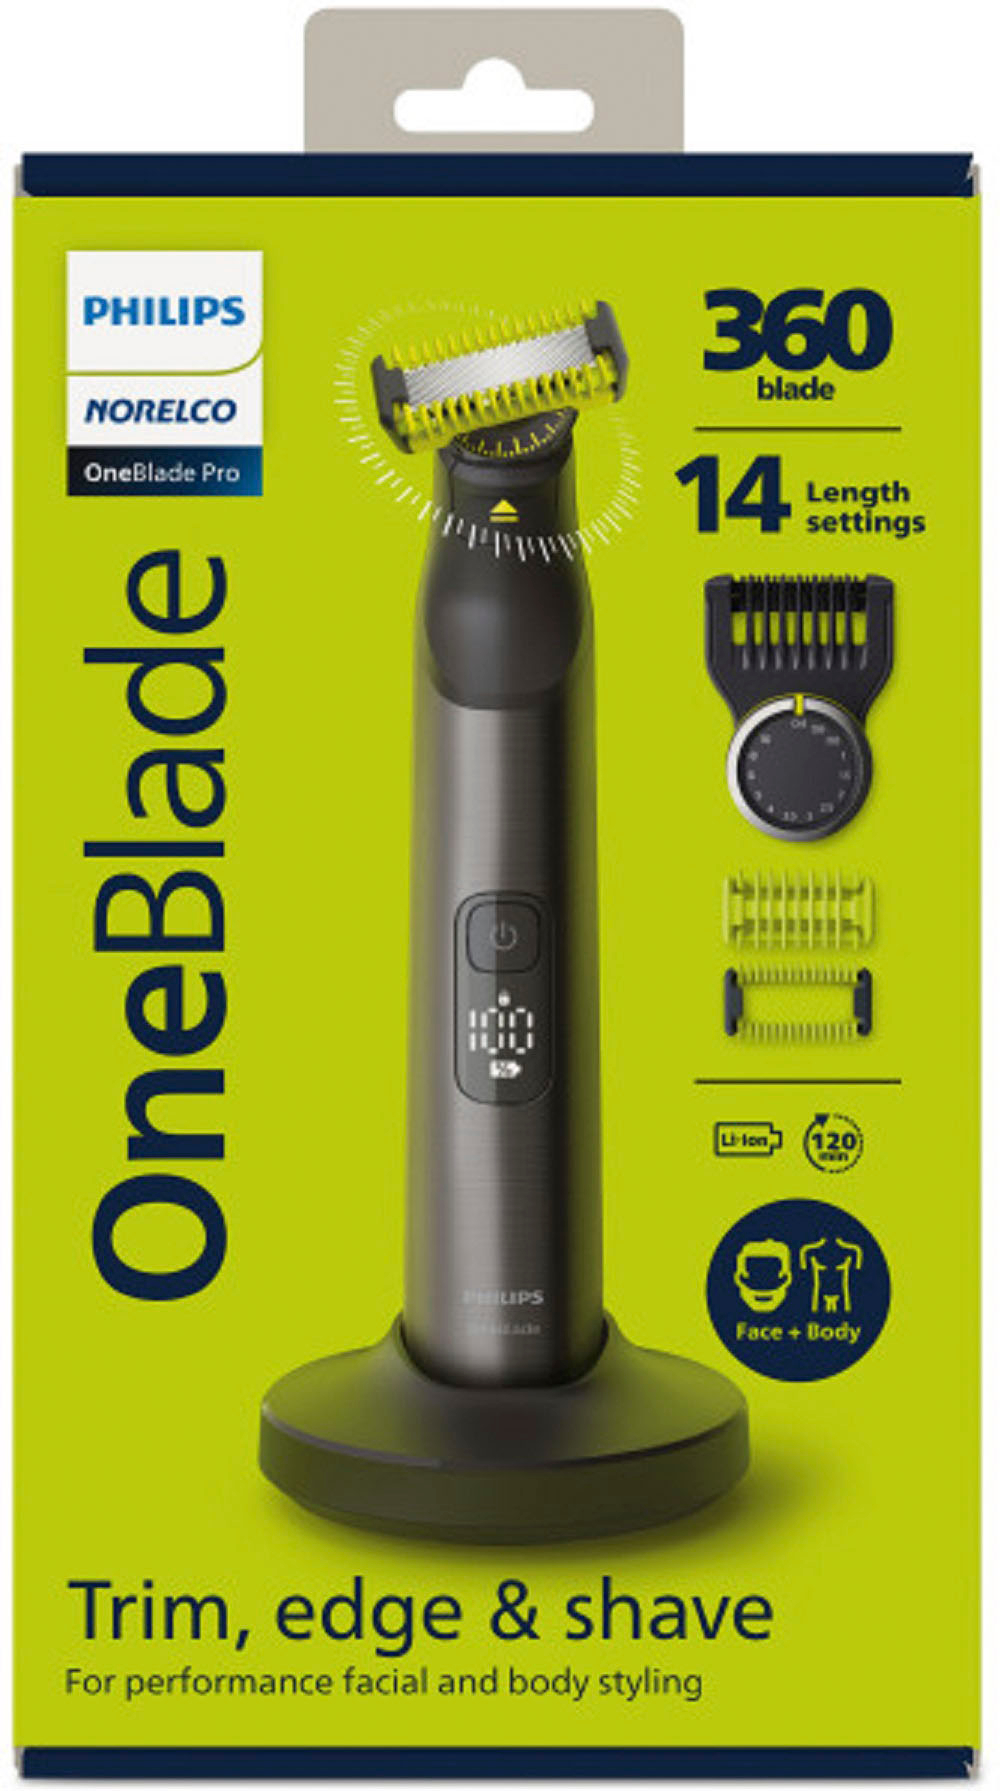 OneBlade Pro 360 Face QP6531/70